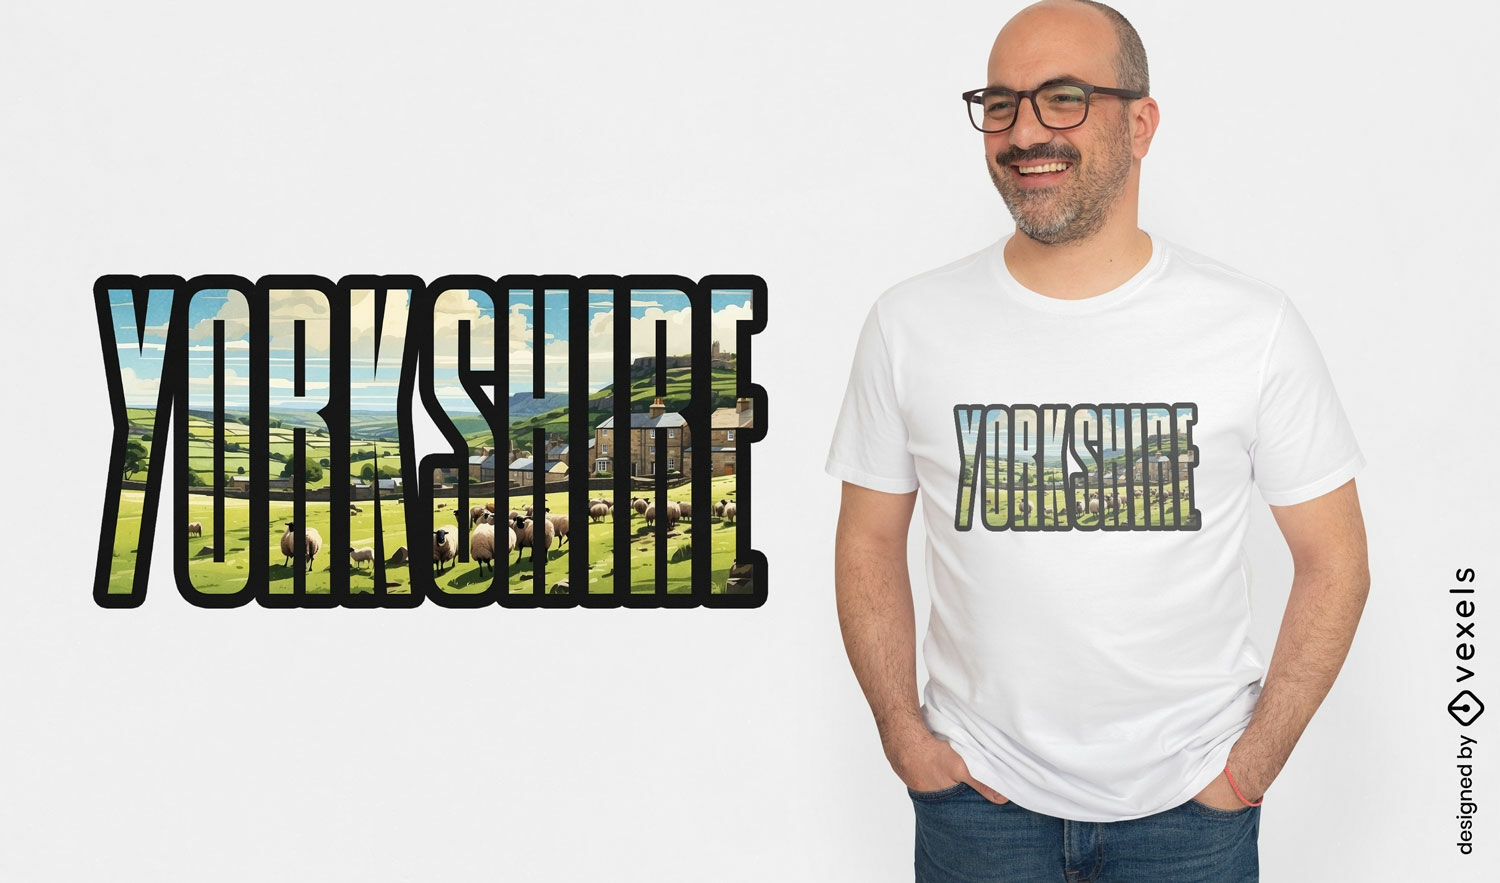 Yorkshire slogan t-shirt design